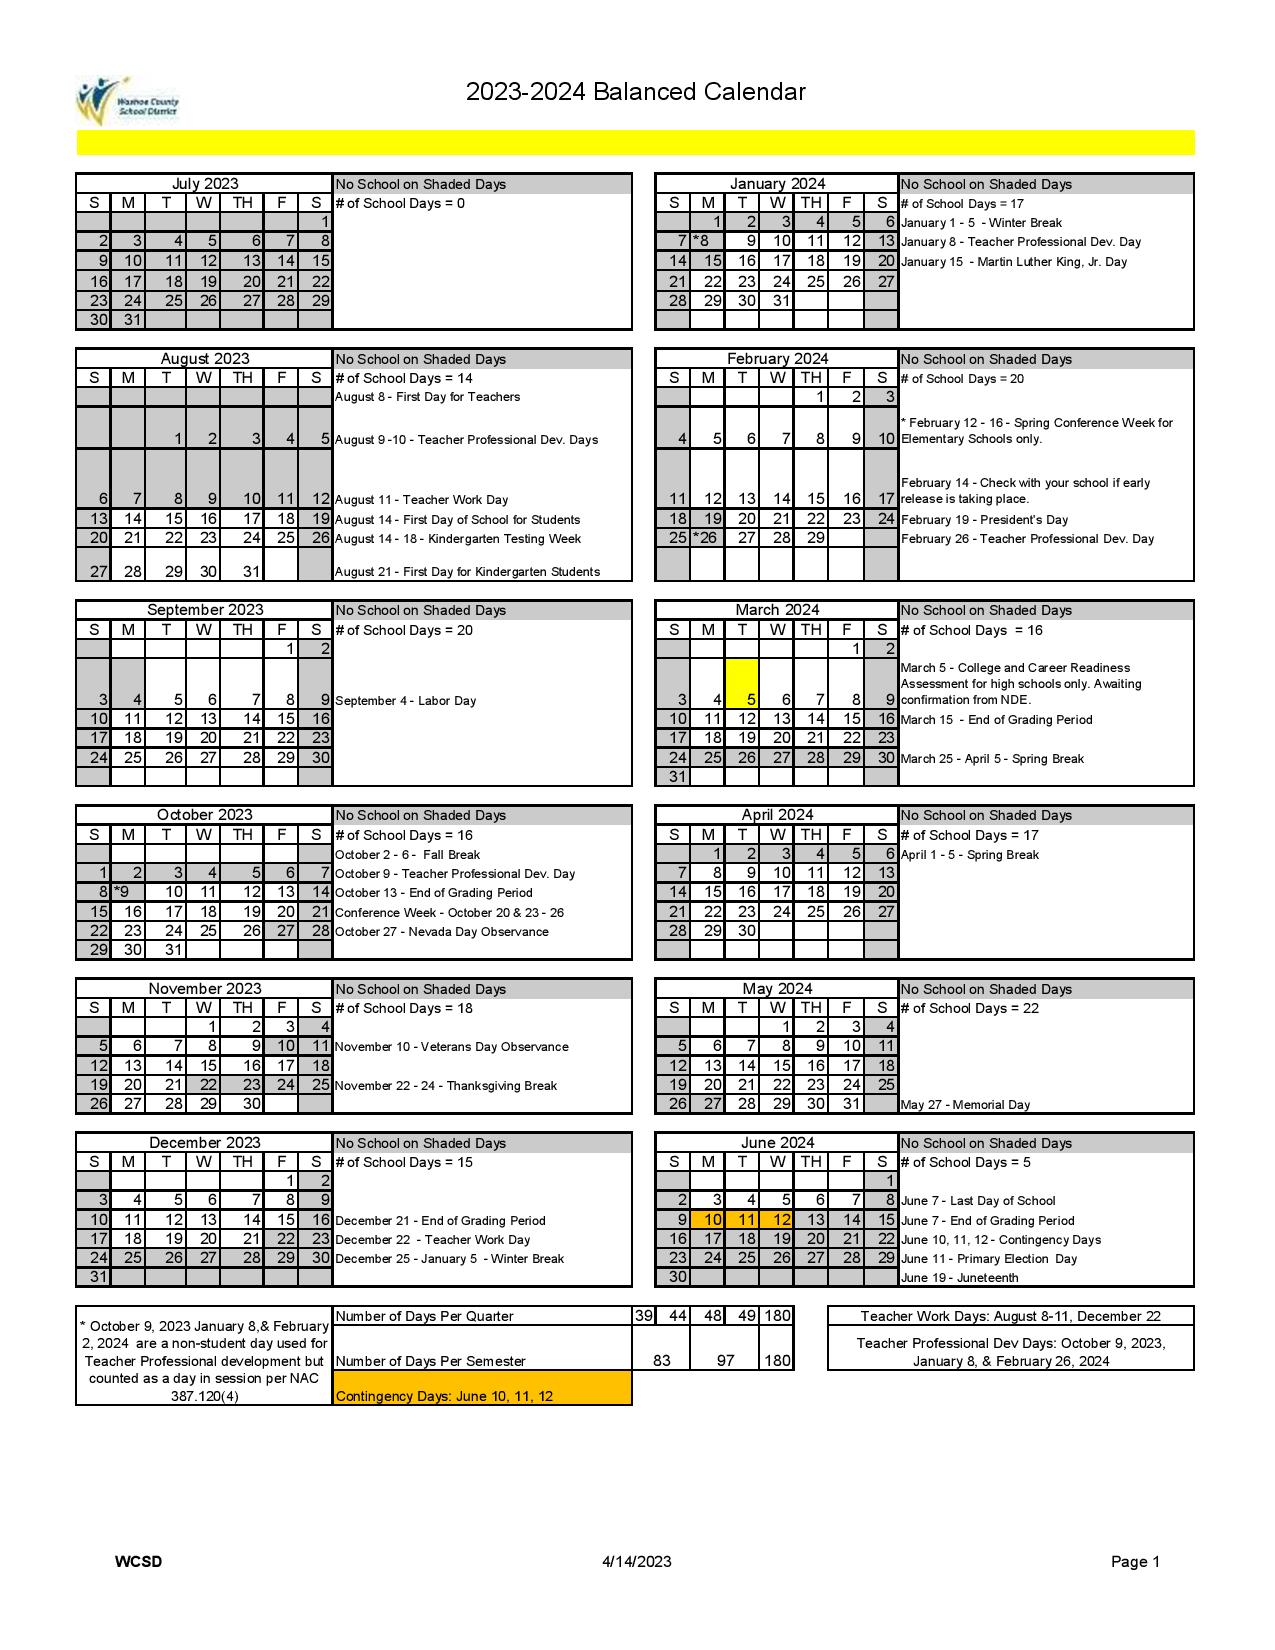 washoe-county-school-district-calendar-2023-2024-school-calendar-info